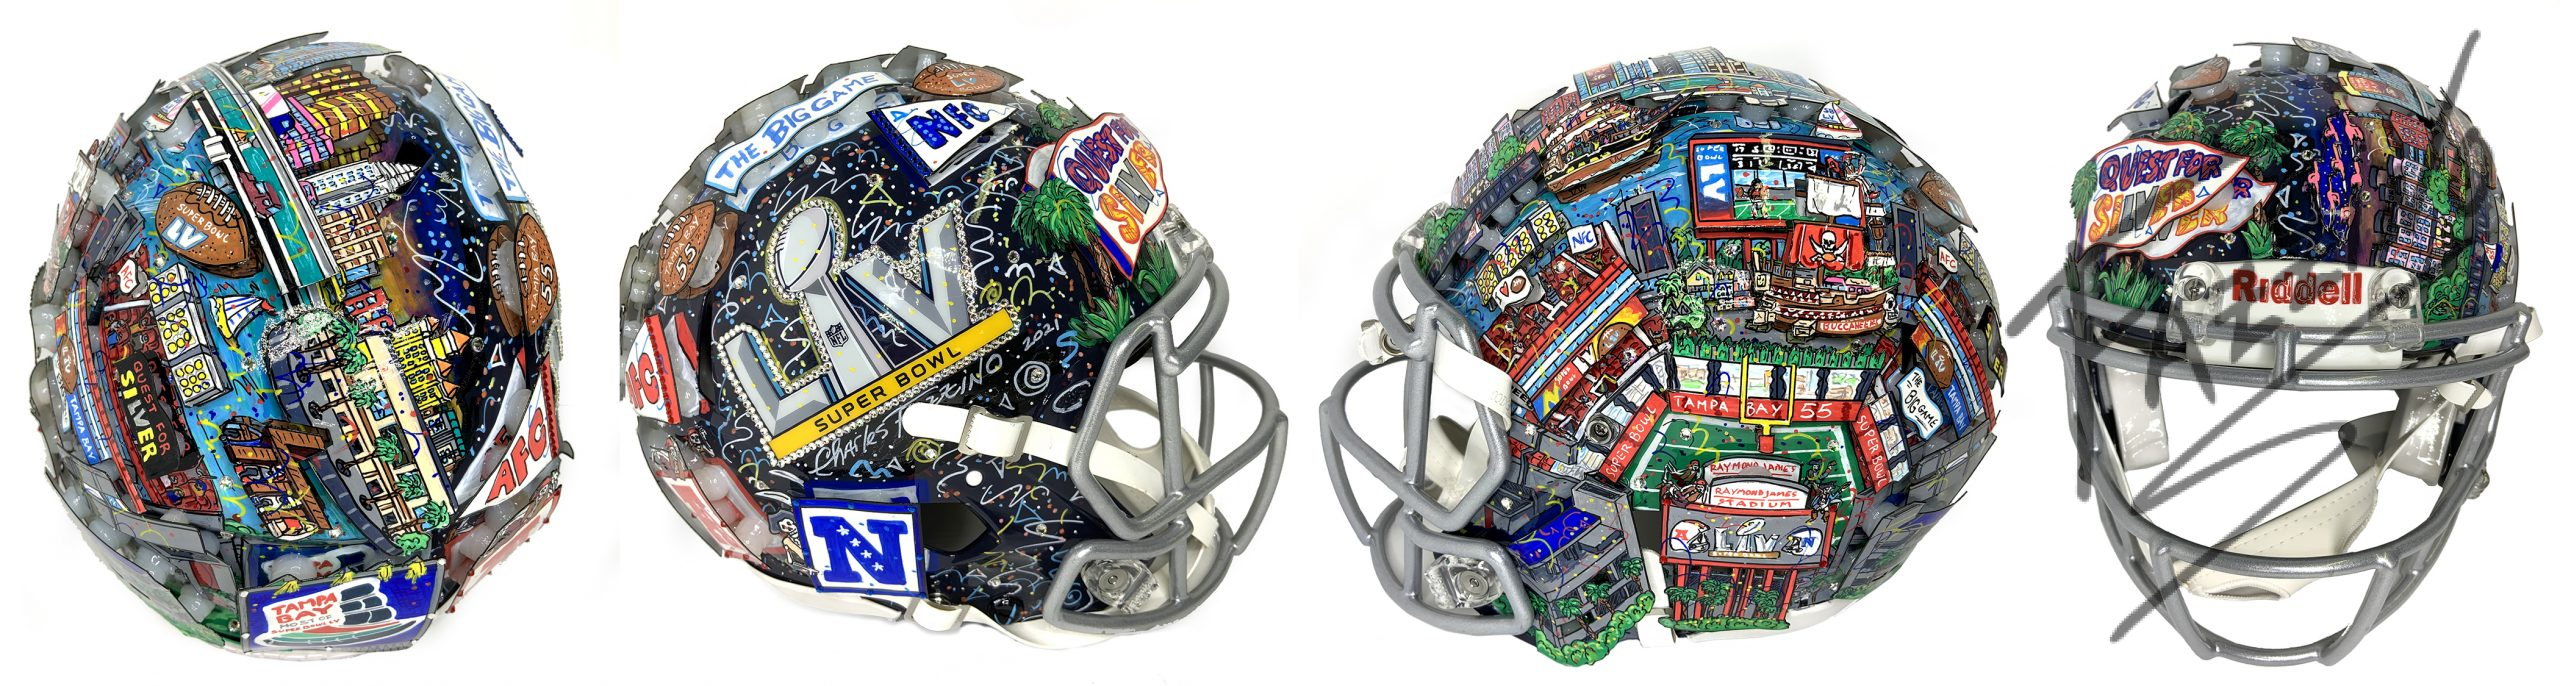 Fazzino's Super Bowl LV original hand-painted helmet from multiple views.